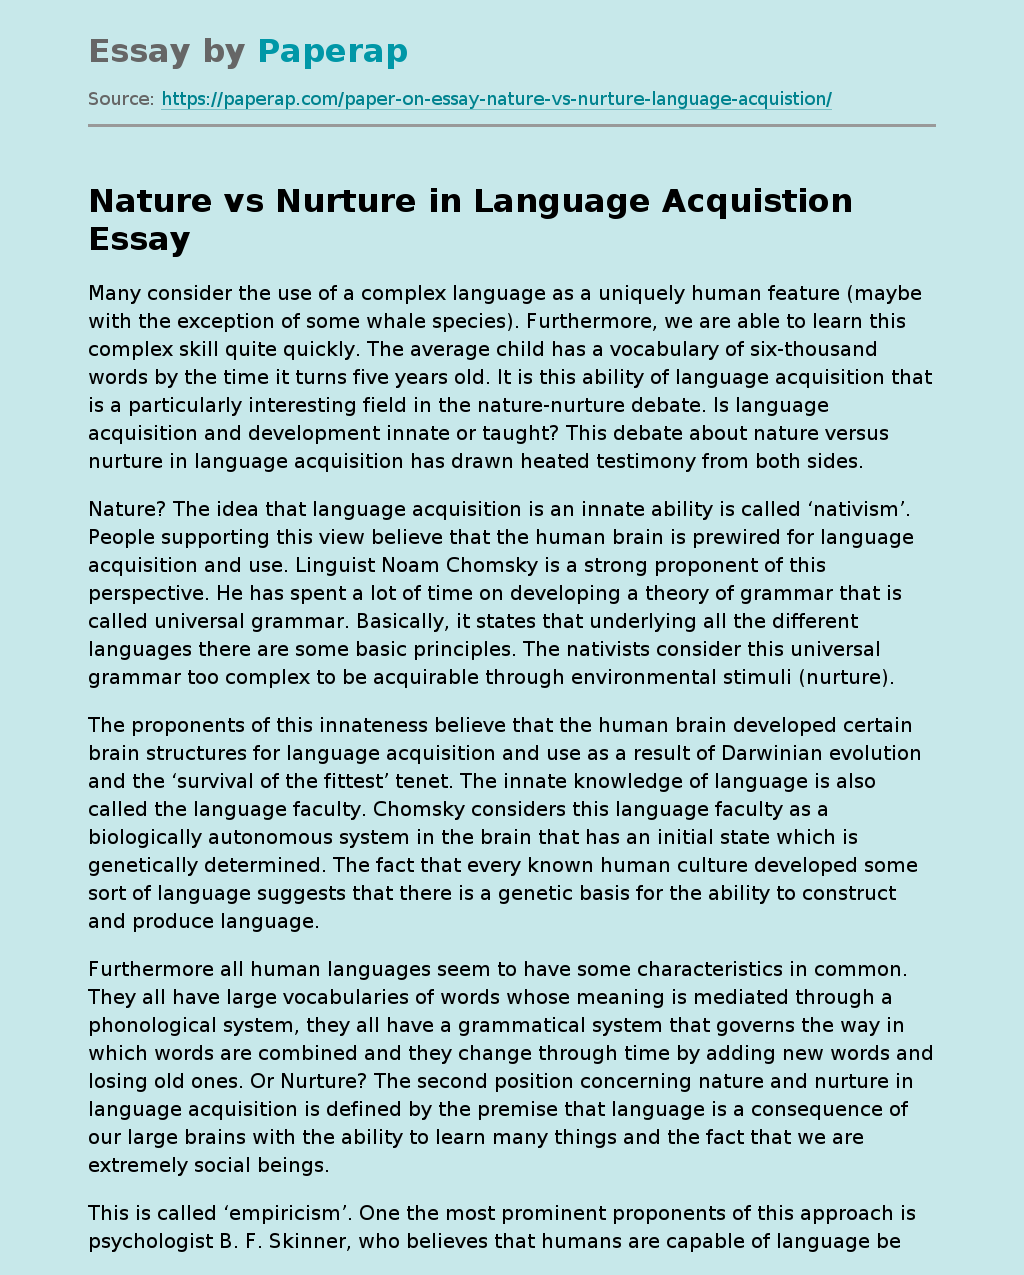 Nature vs Nurture in Language Acquistion